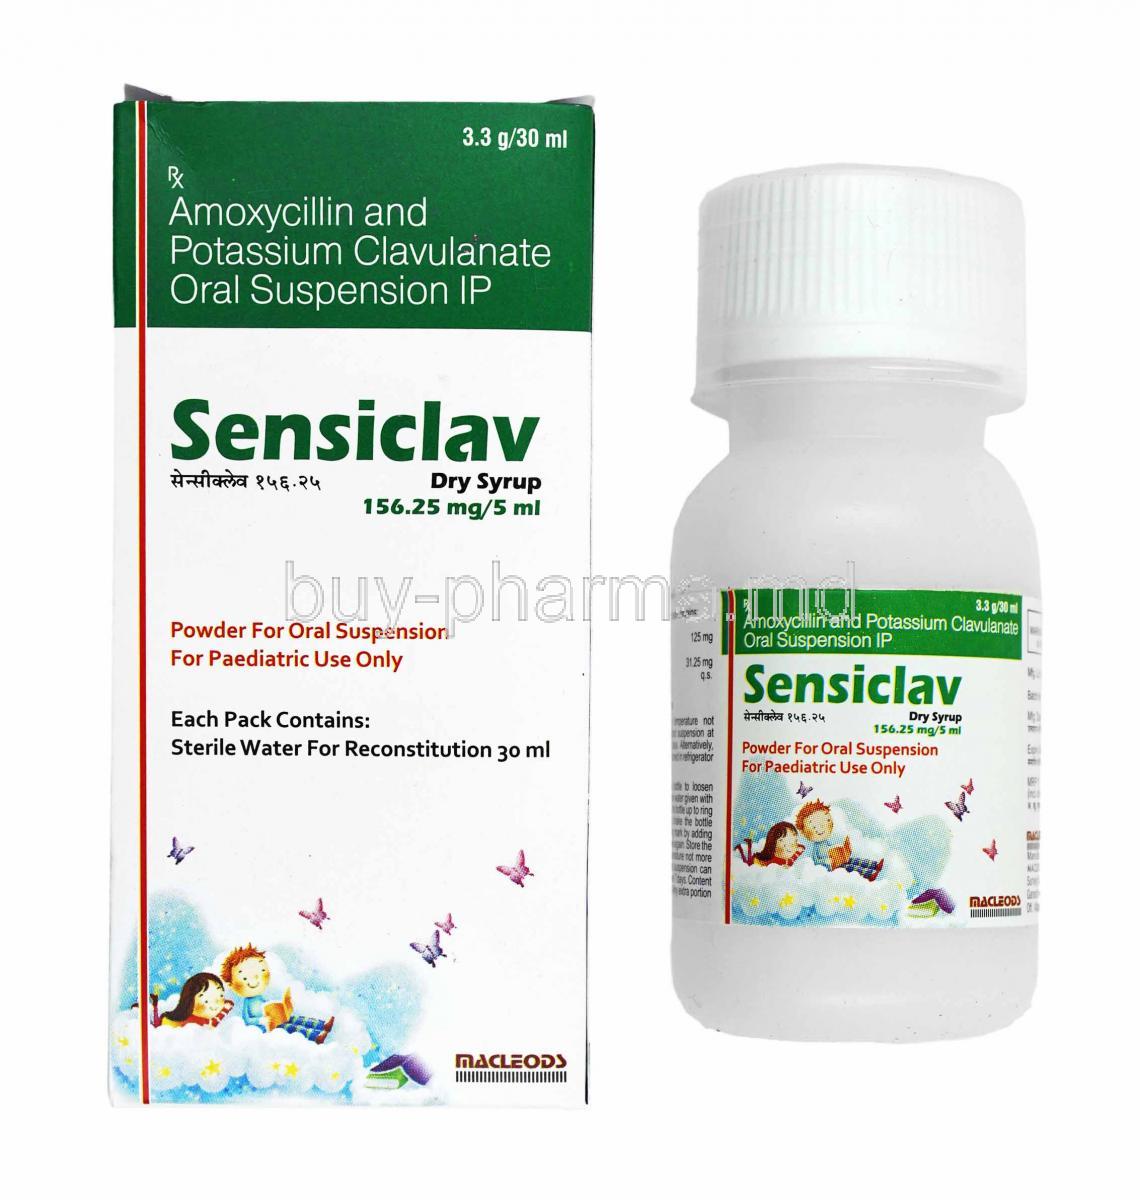 Sensiclav Dry Syrup, Amoxicillin and Clavulanic Acid box and bottle